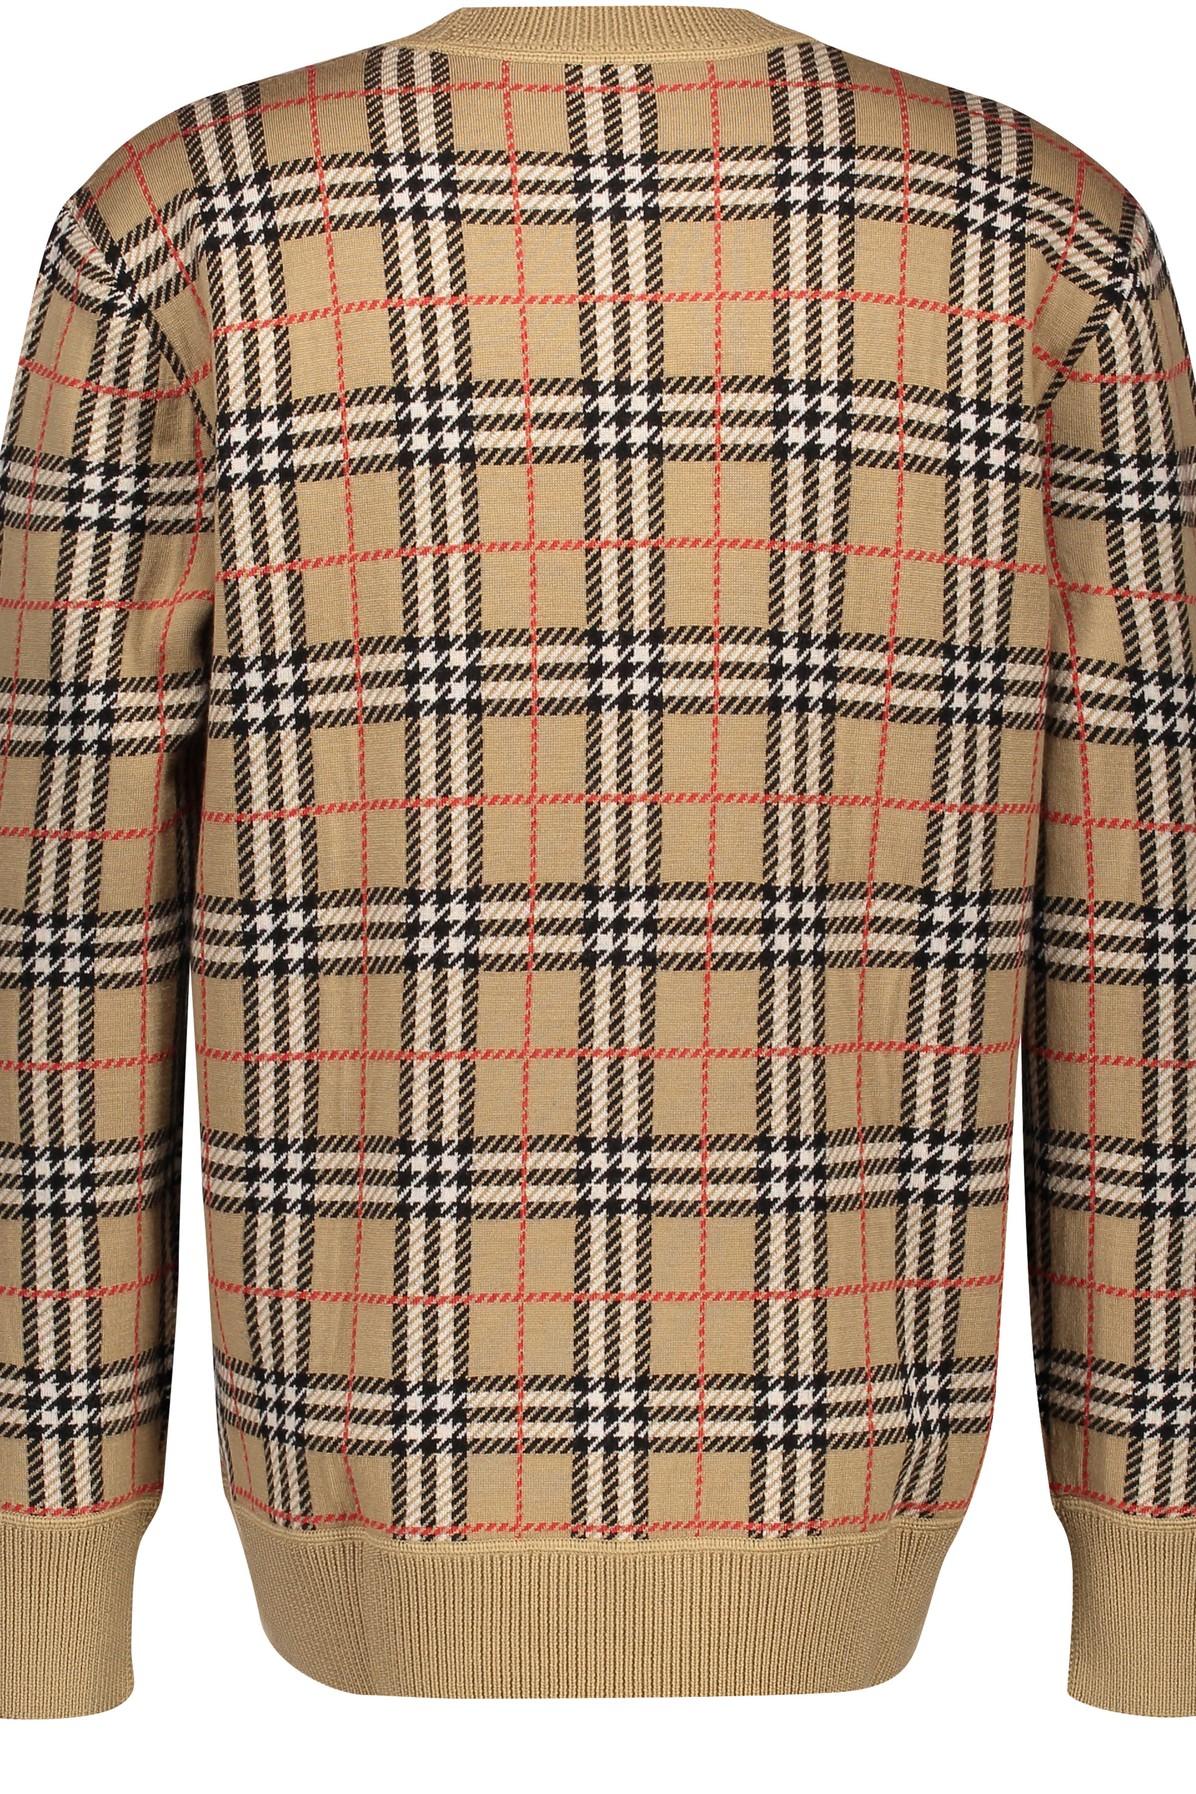 Burberry Fletcher Nova Check-jacquard Wool Sweater for Men - Lyst